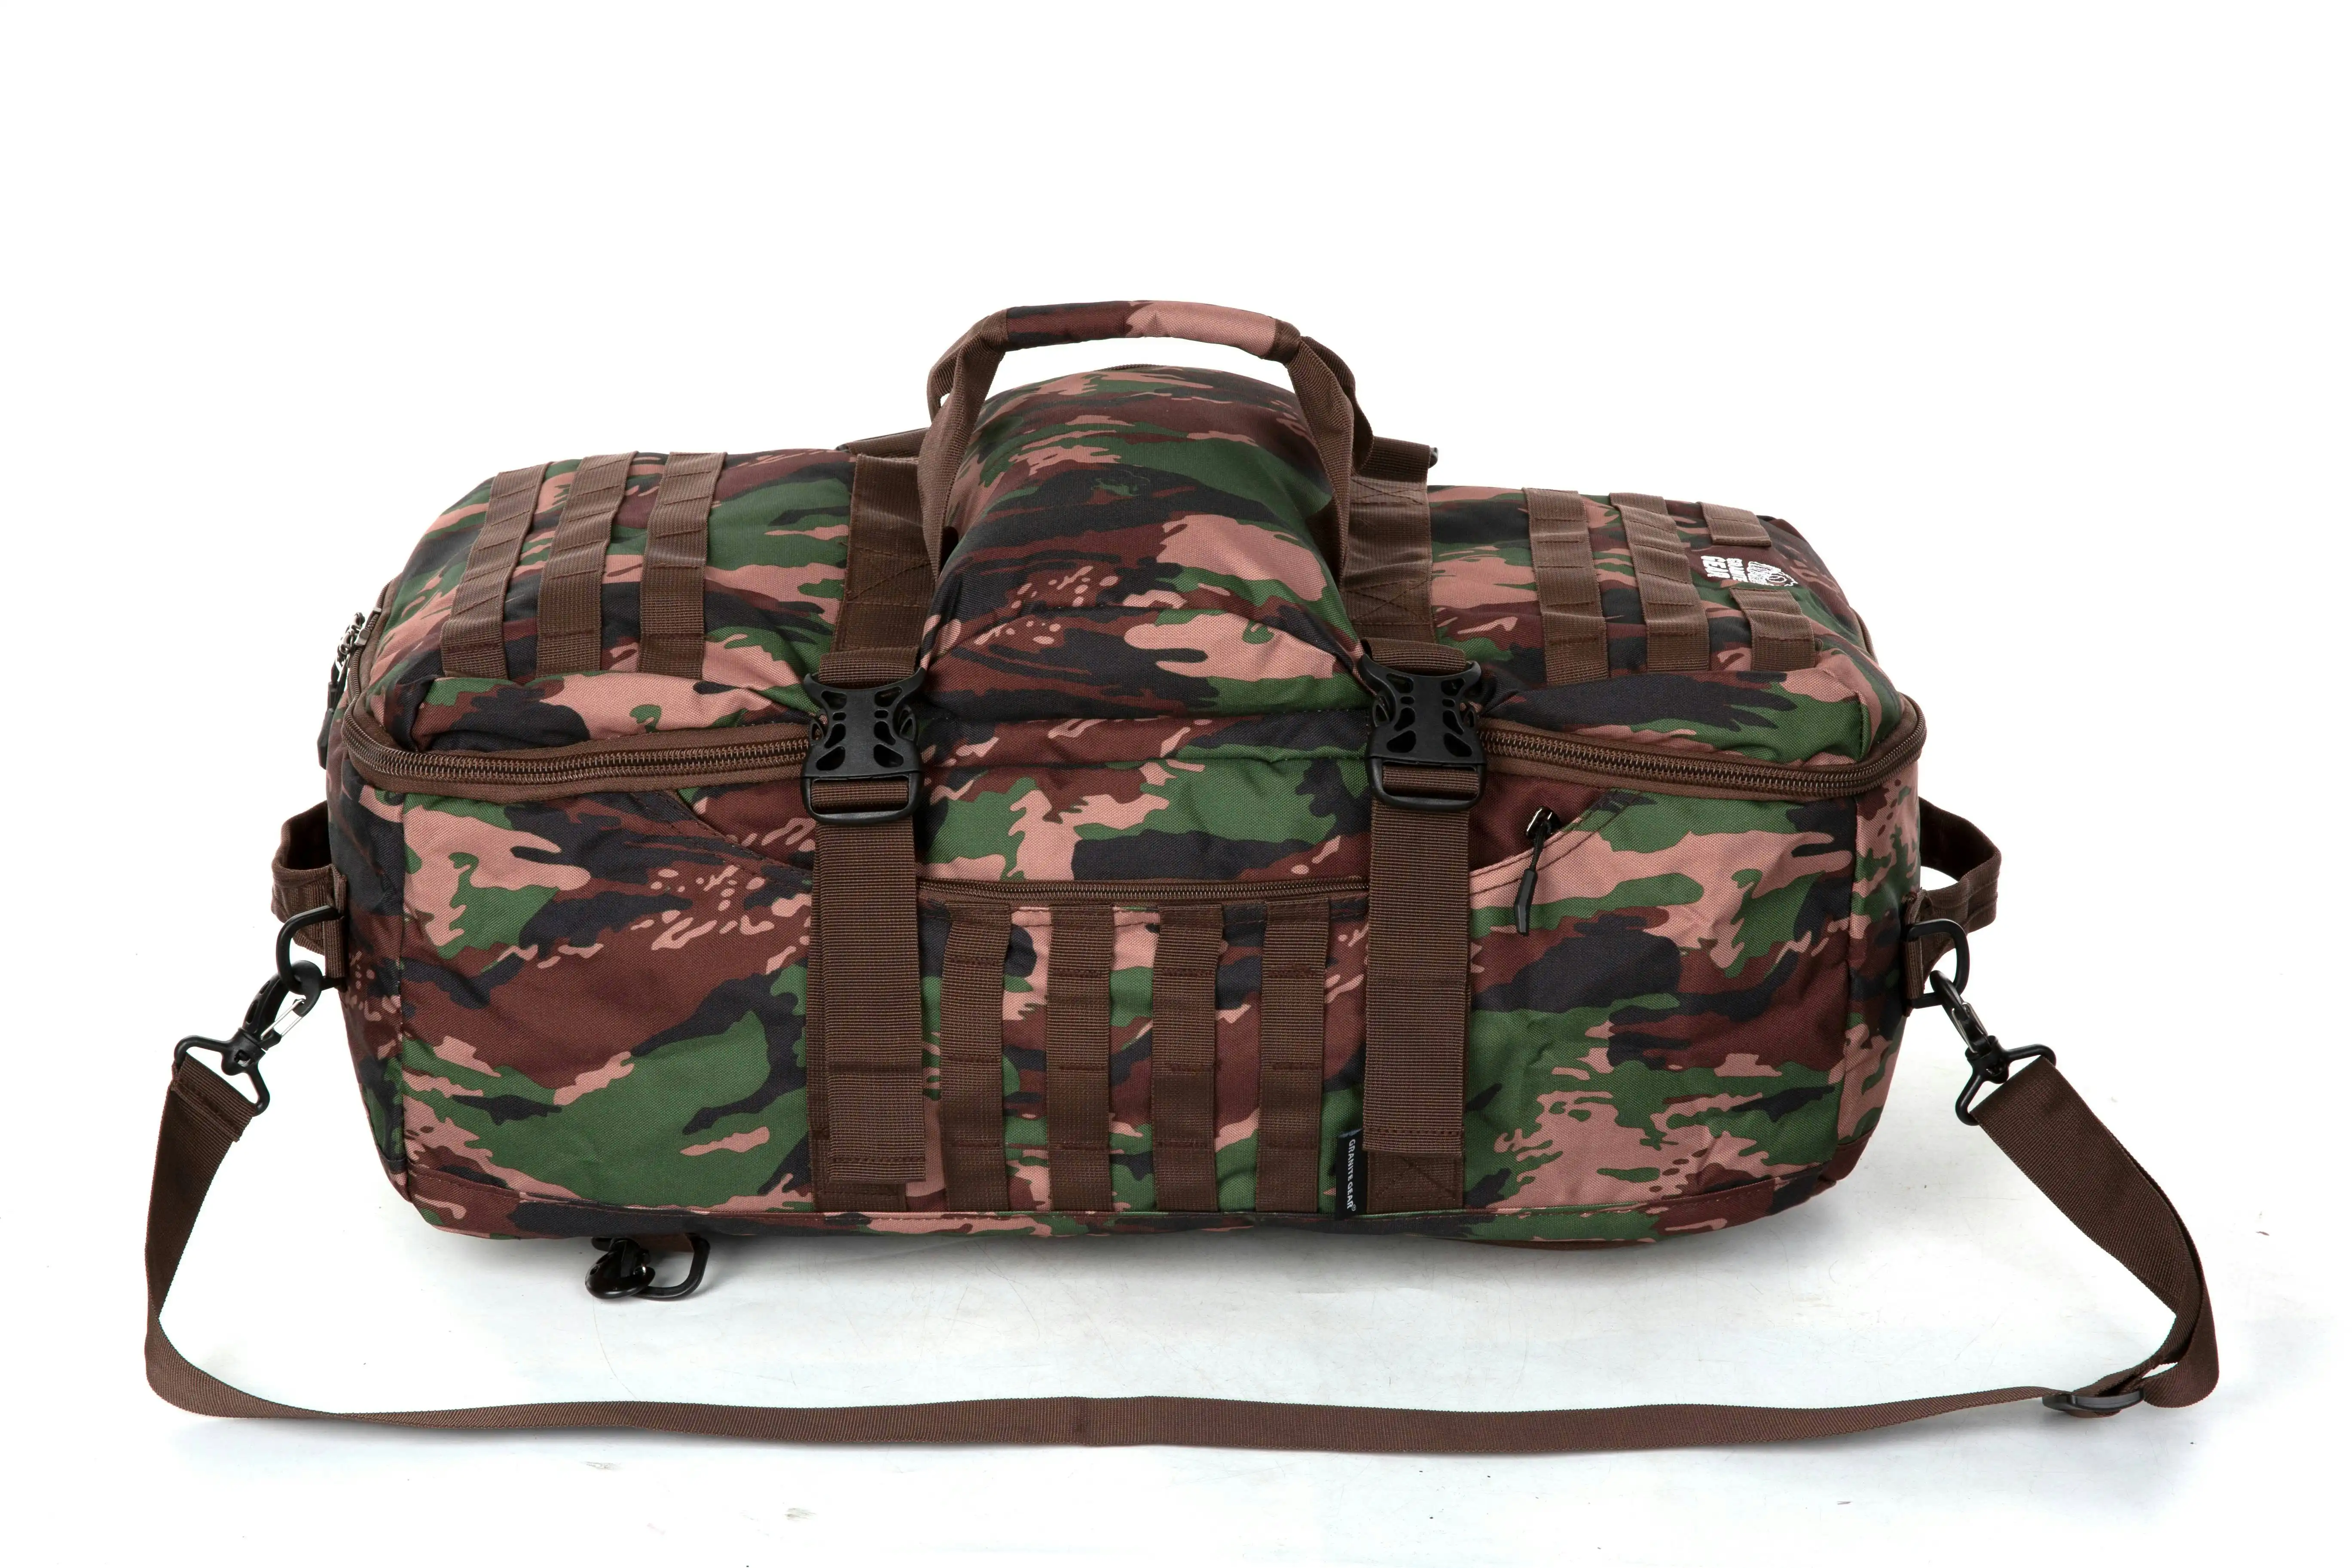 Granite Gear Duffle Bag With Backpack Straps Waterproof Sports Gym Duffel Crossbody Camping Hiking Bag G7555